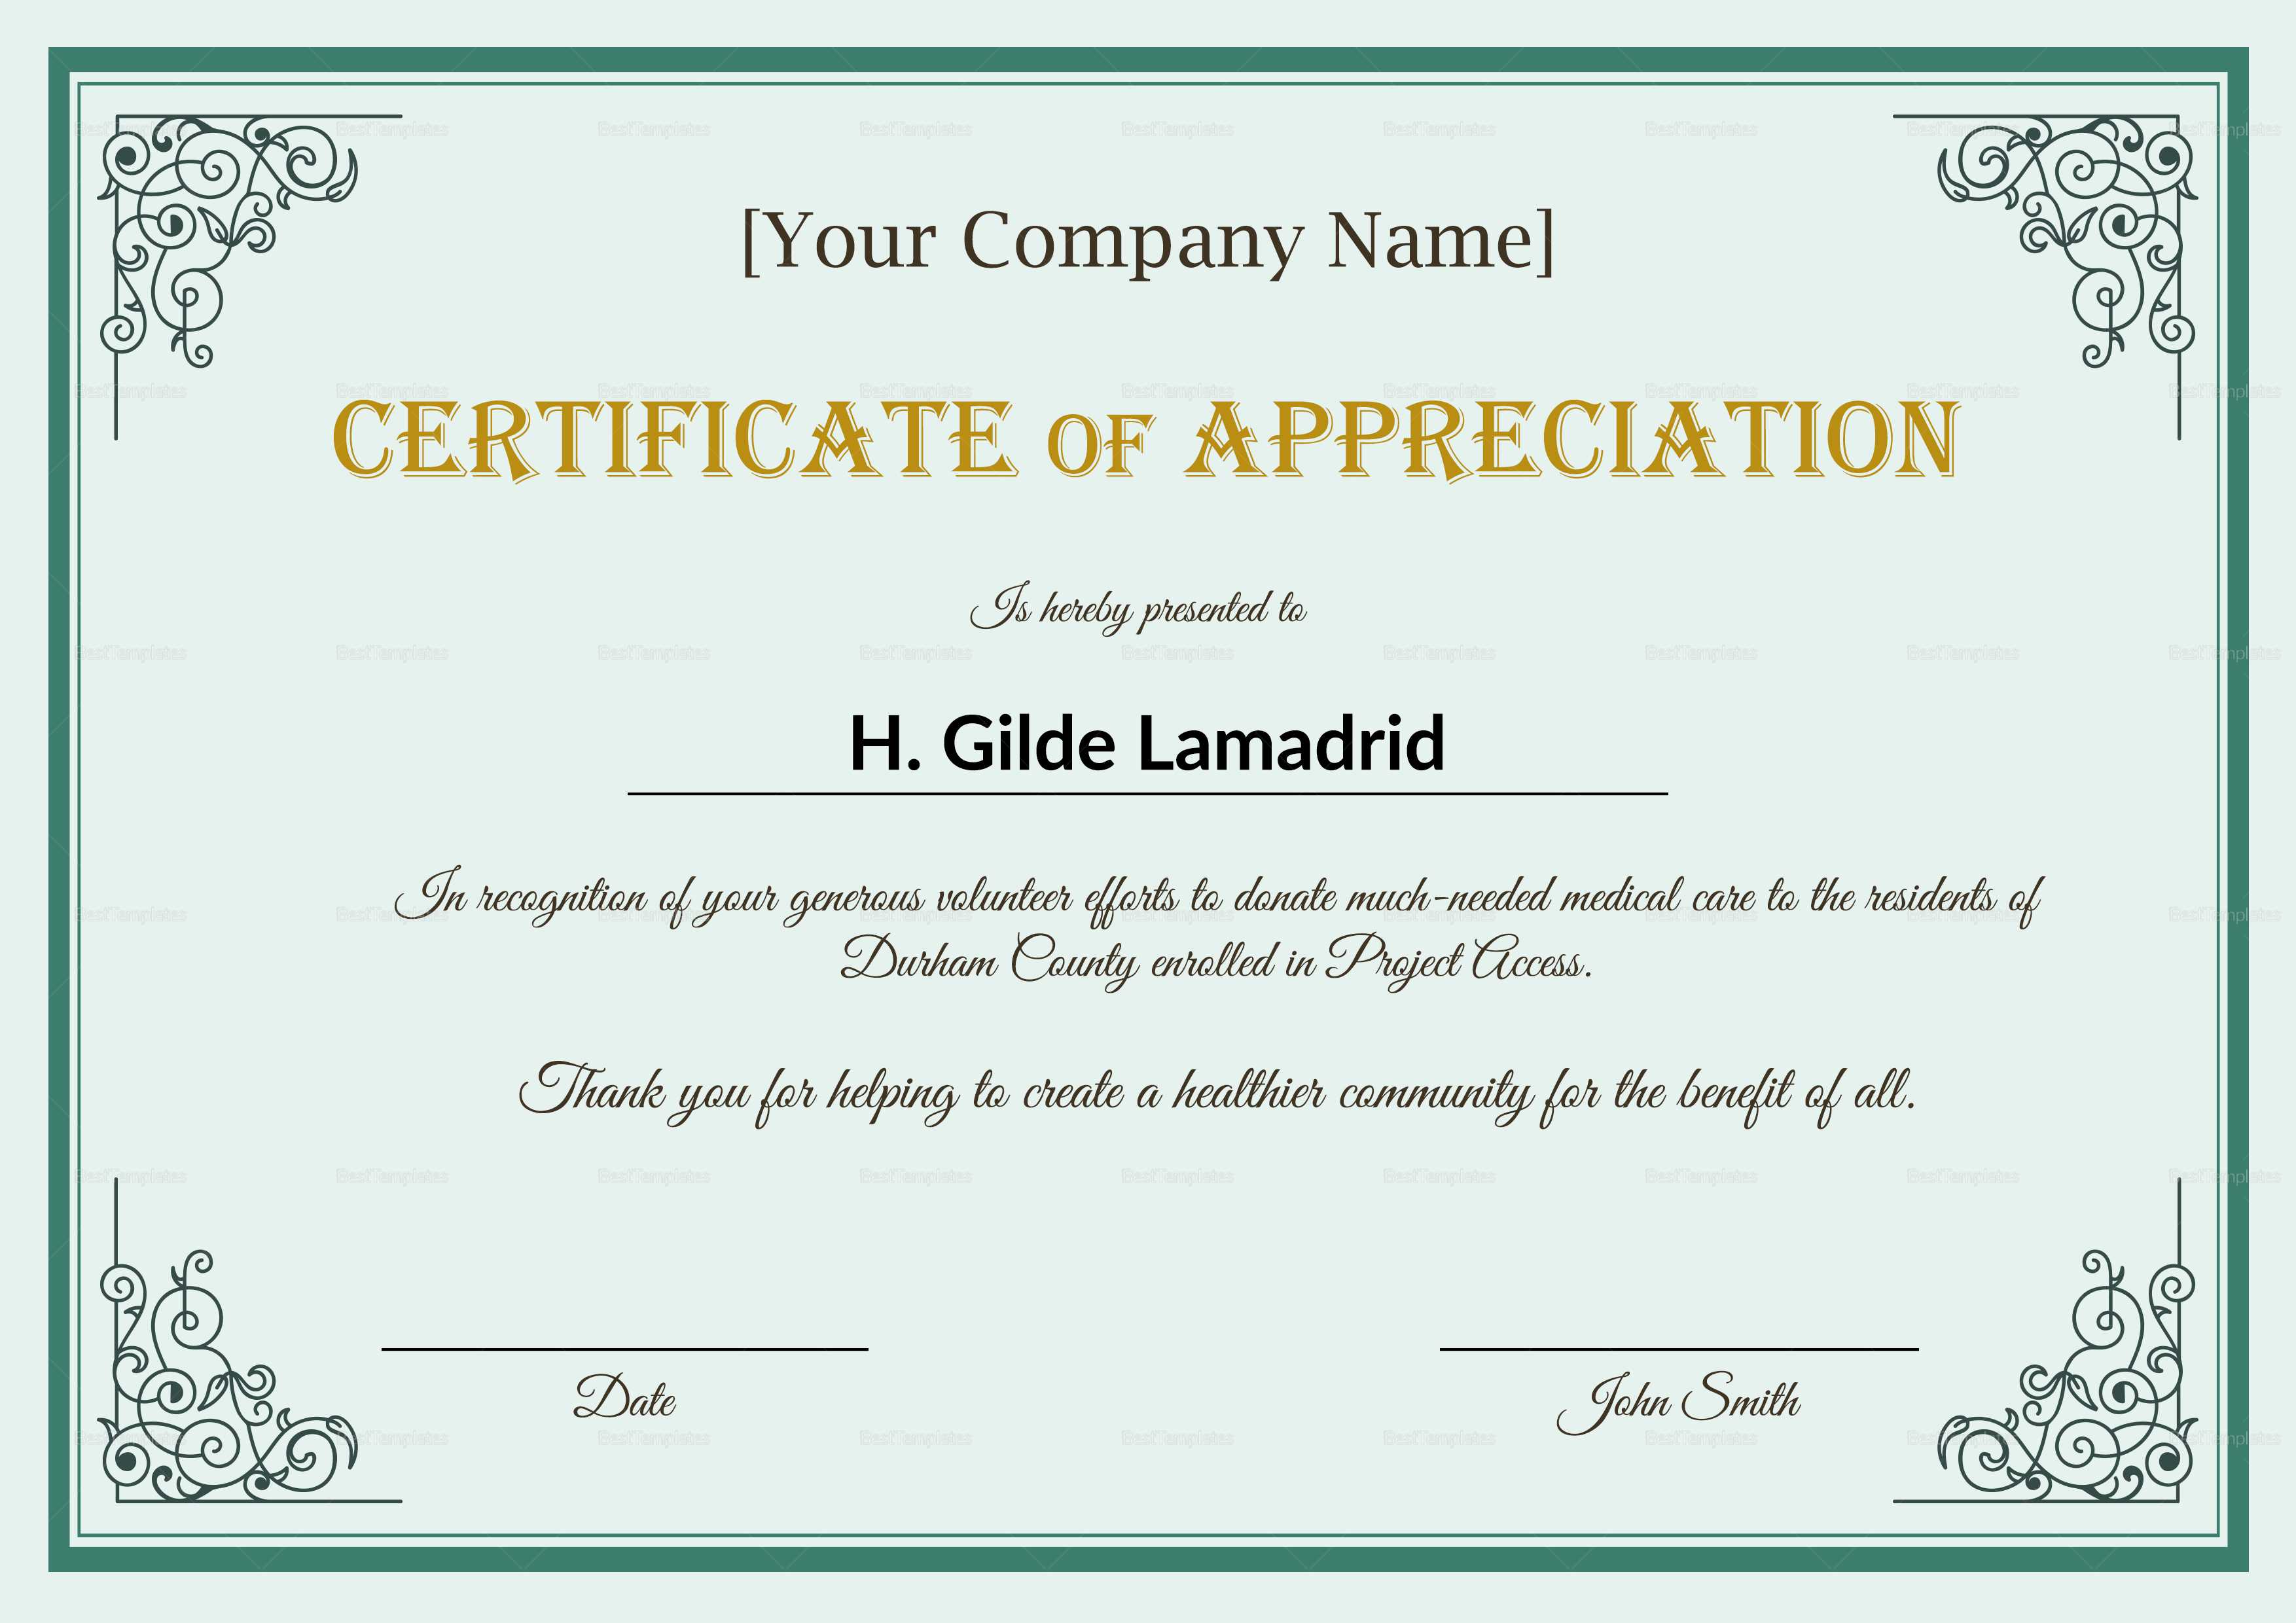 Company Employee Appreciation Certificate Template Throughout Template For Recognition Certificate